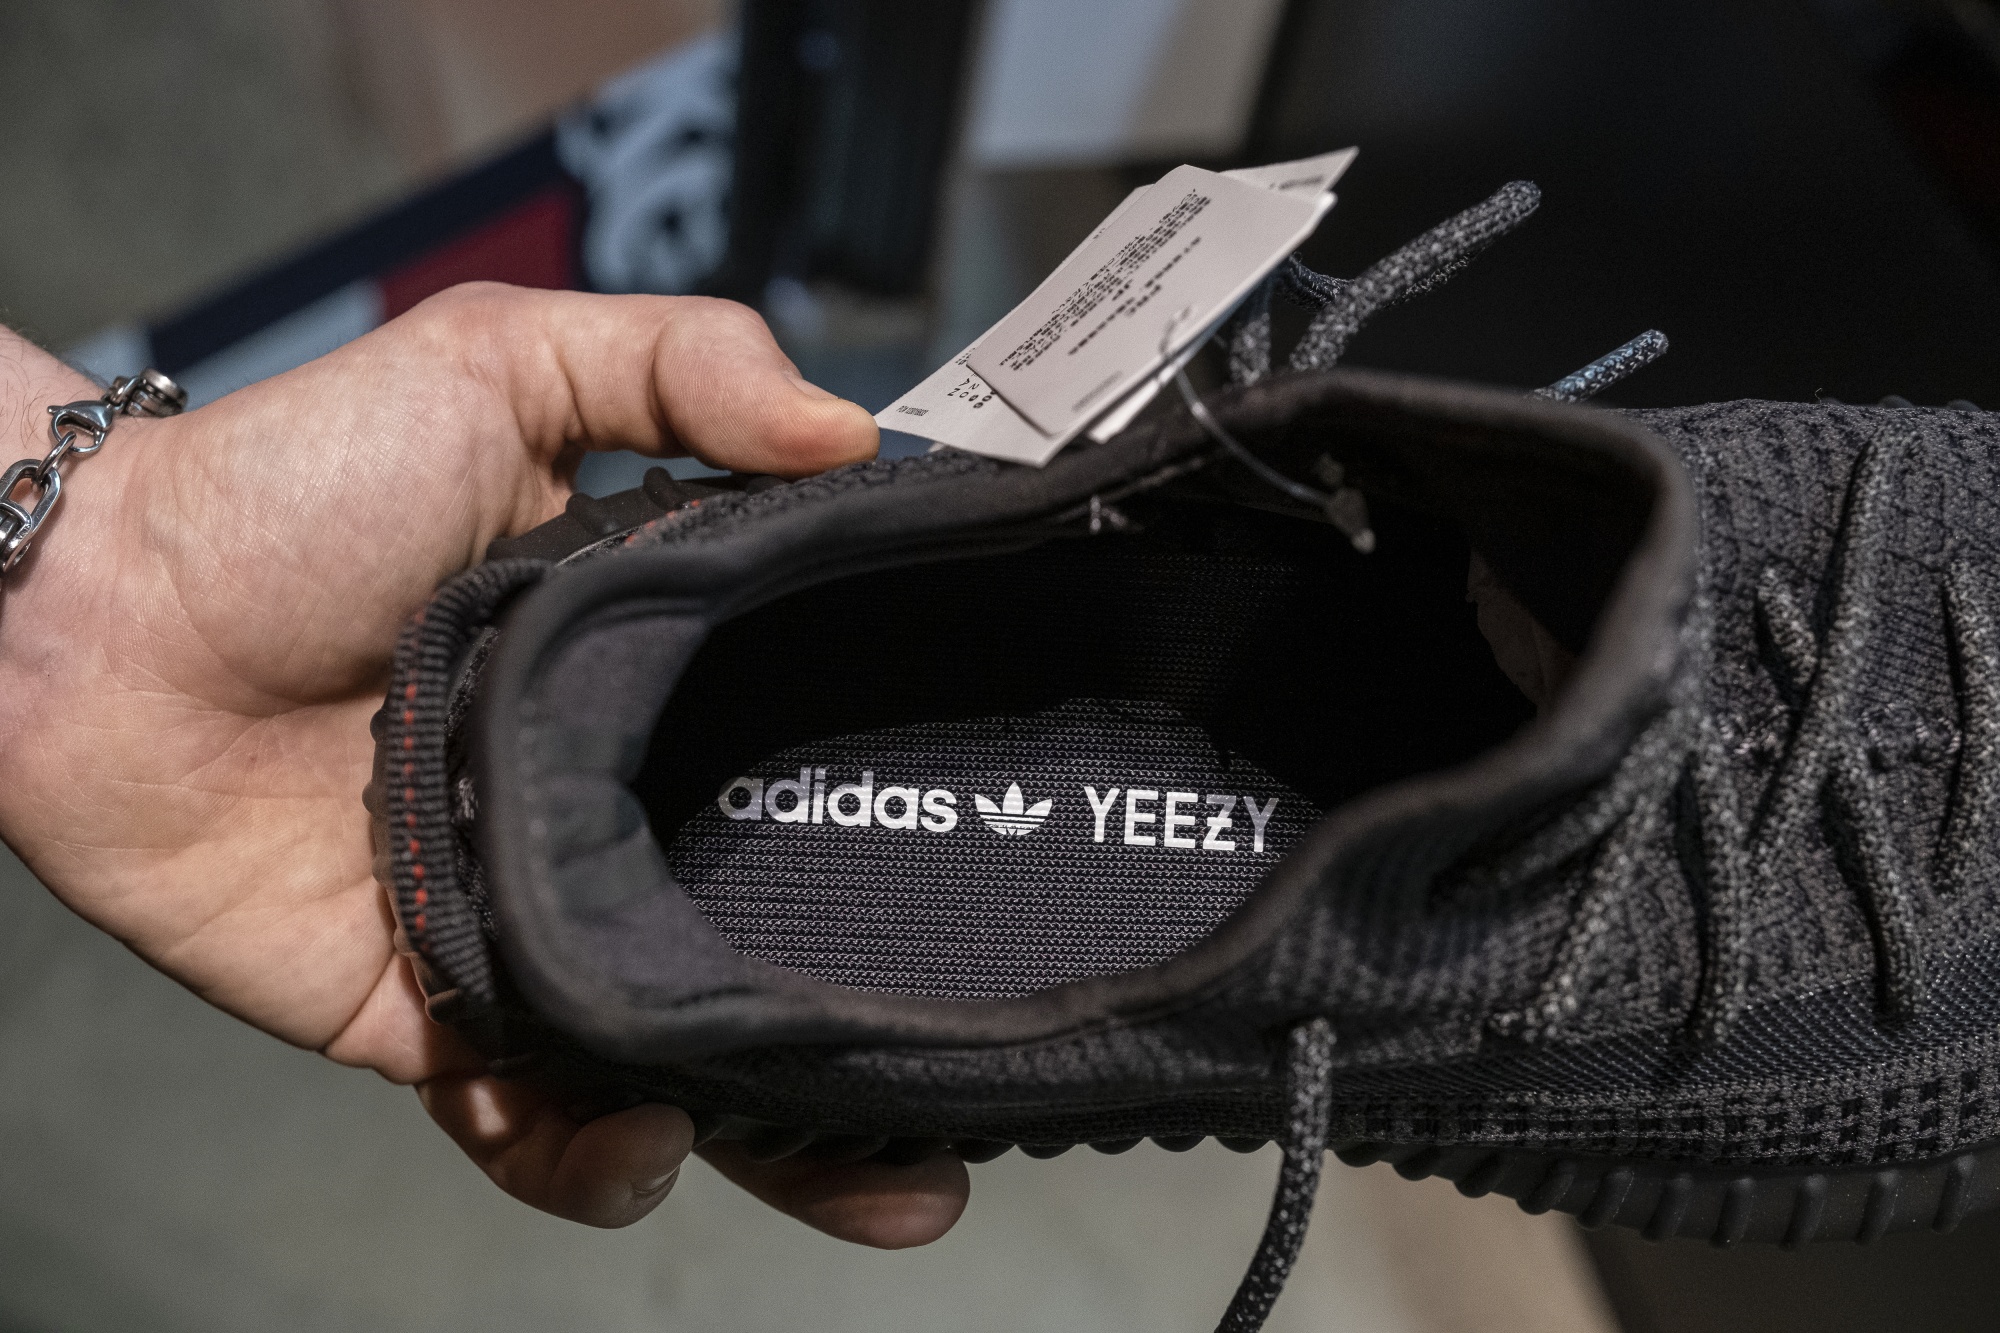 Kort levetid Frastødende jeg er glad Yeezy Shoes Boost Adidas' Earnings Guidance - Bloomberg